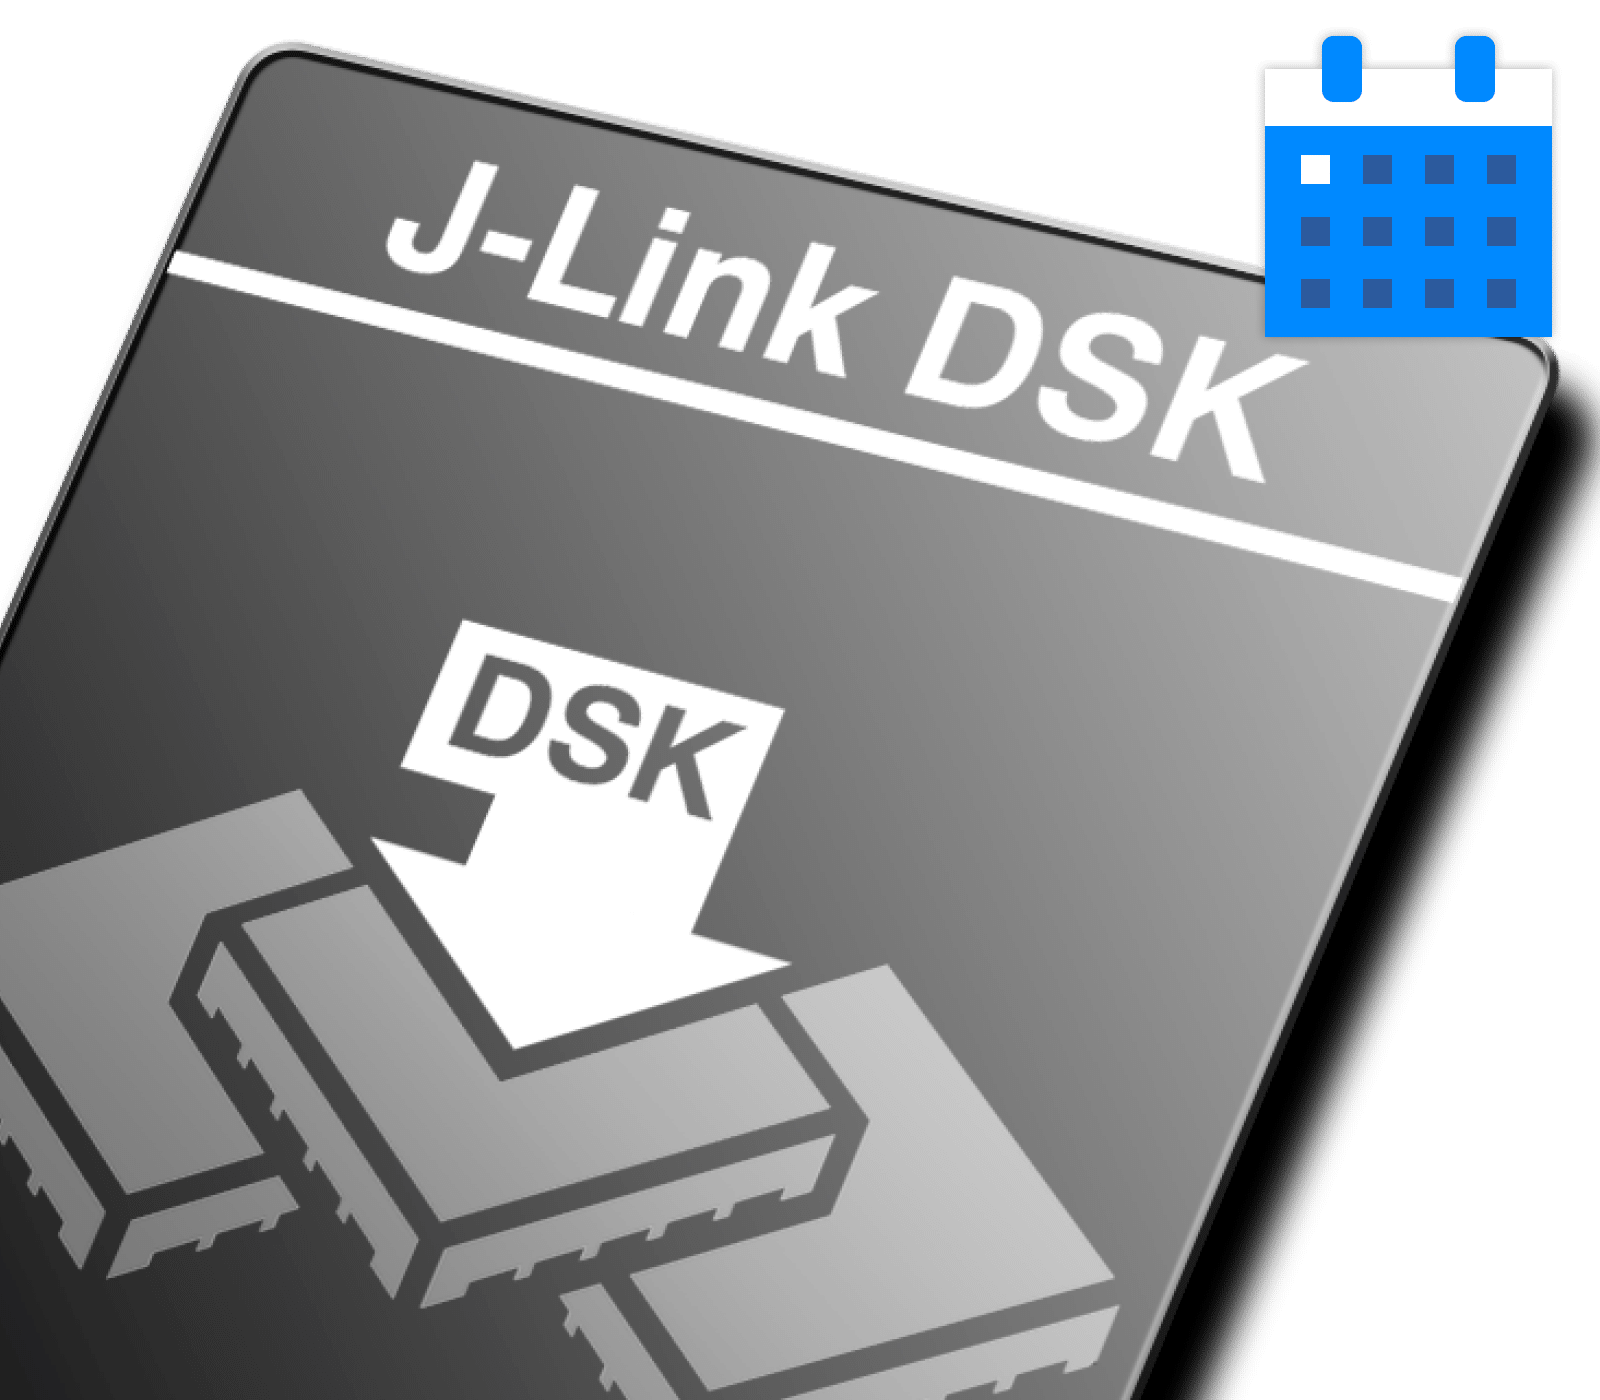 SEGGER J-Link DSK Extension